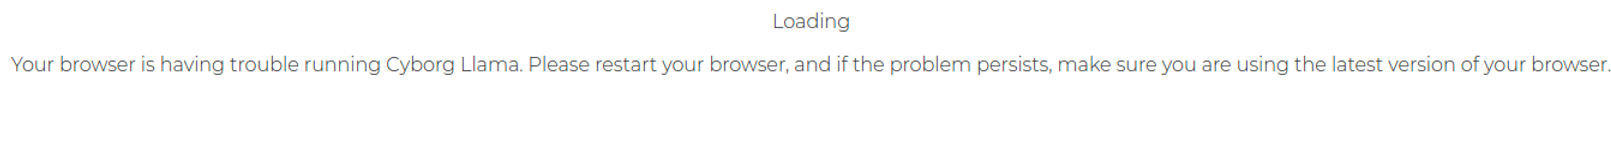 Screenshot of an error message in Cyborg Llama: "Your browser is having trouble running cyborg llama"